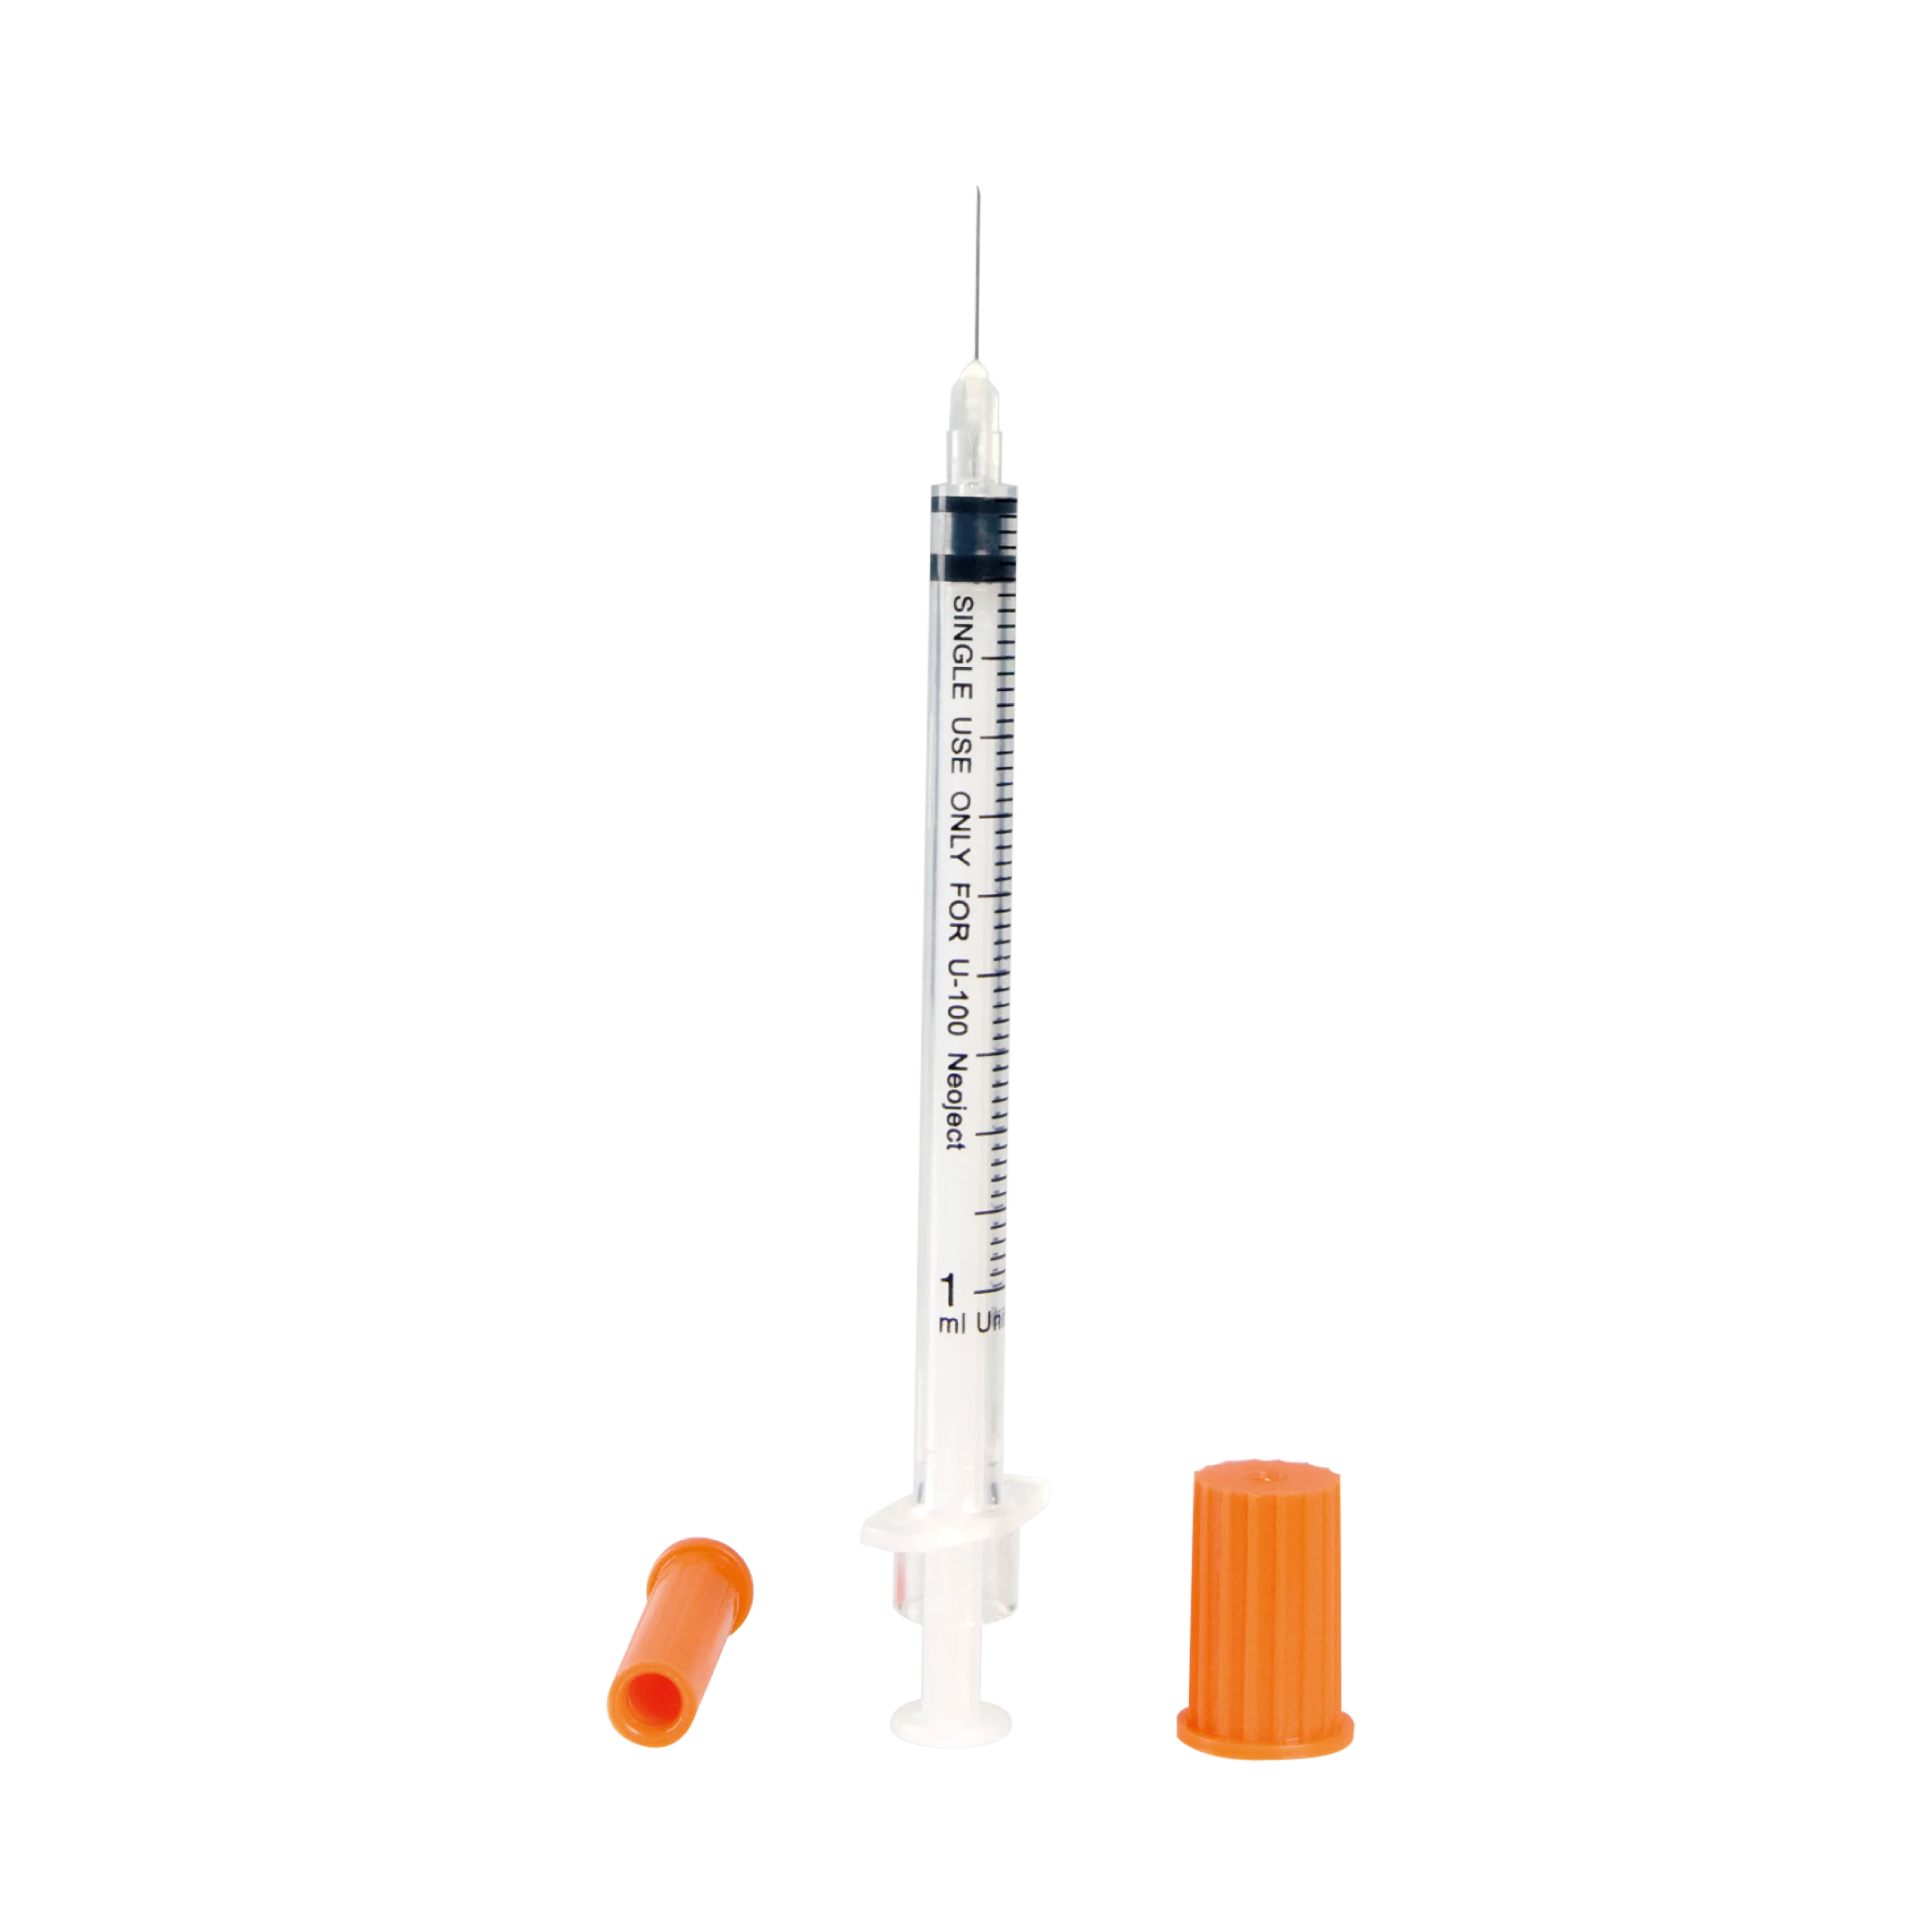 Wego High Quality Best Selling Single Use Medical Sterile 1ml Insulin Syringe Buy Insulin Syringe Sterile Insulin Syringe 1ml Medical Syringe Product On Alibaba Com